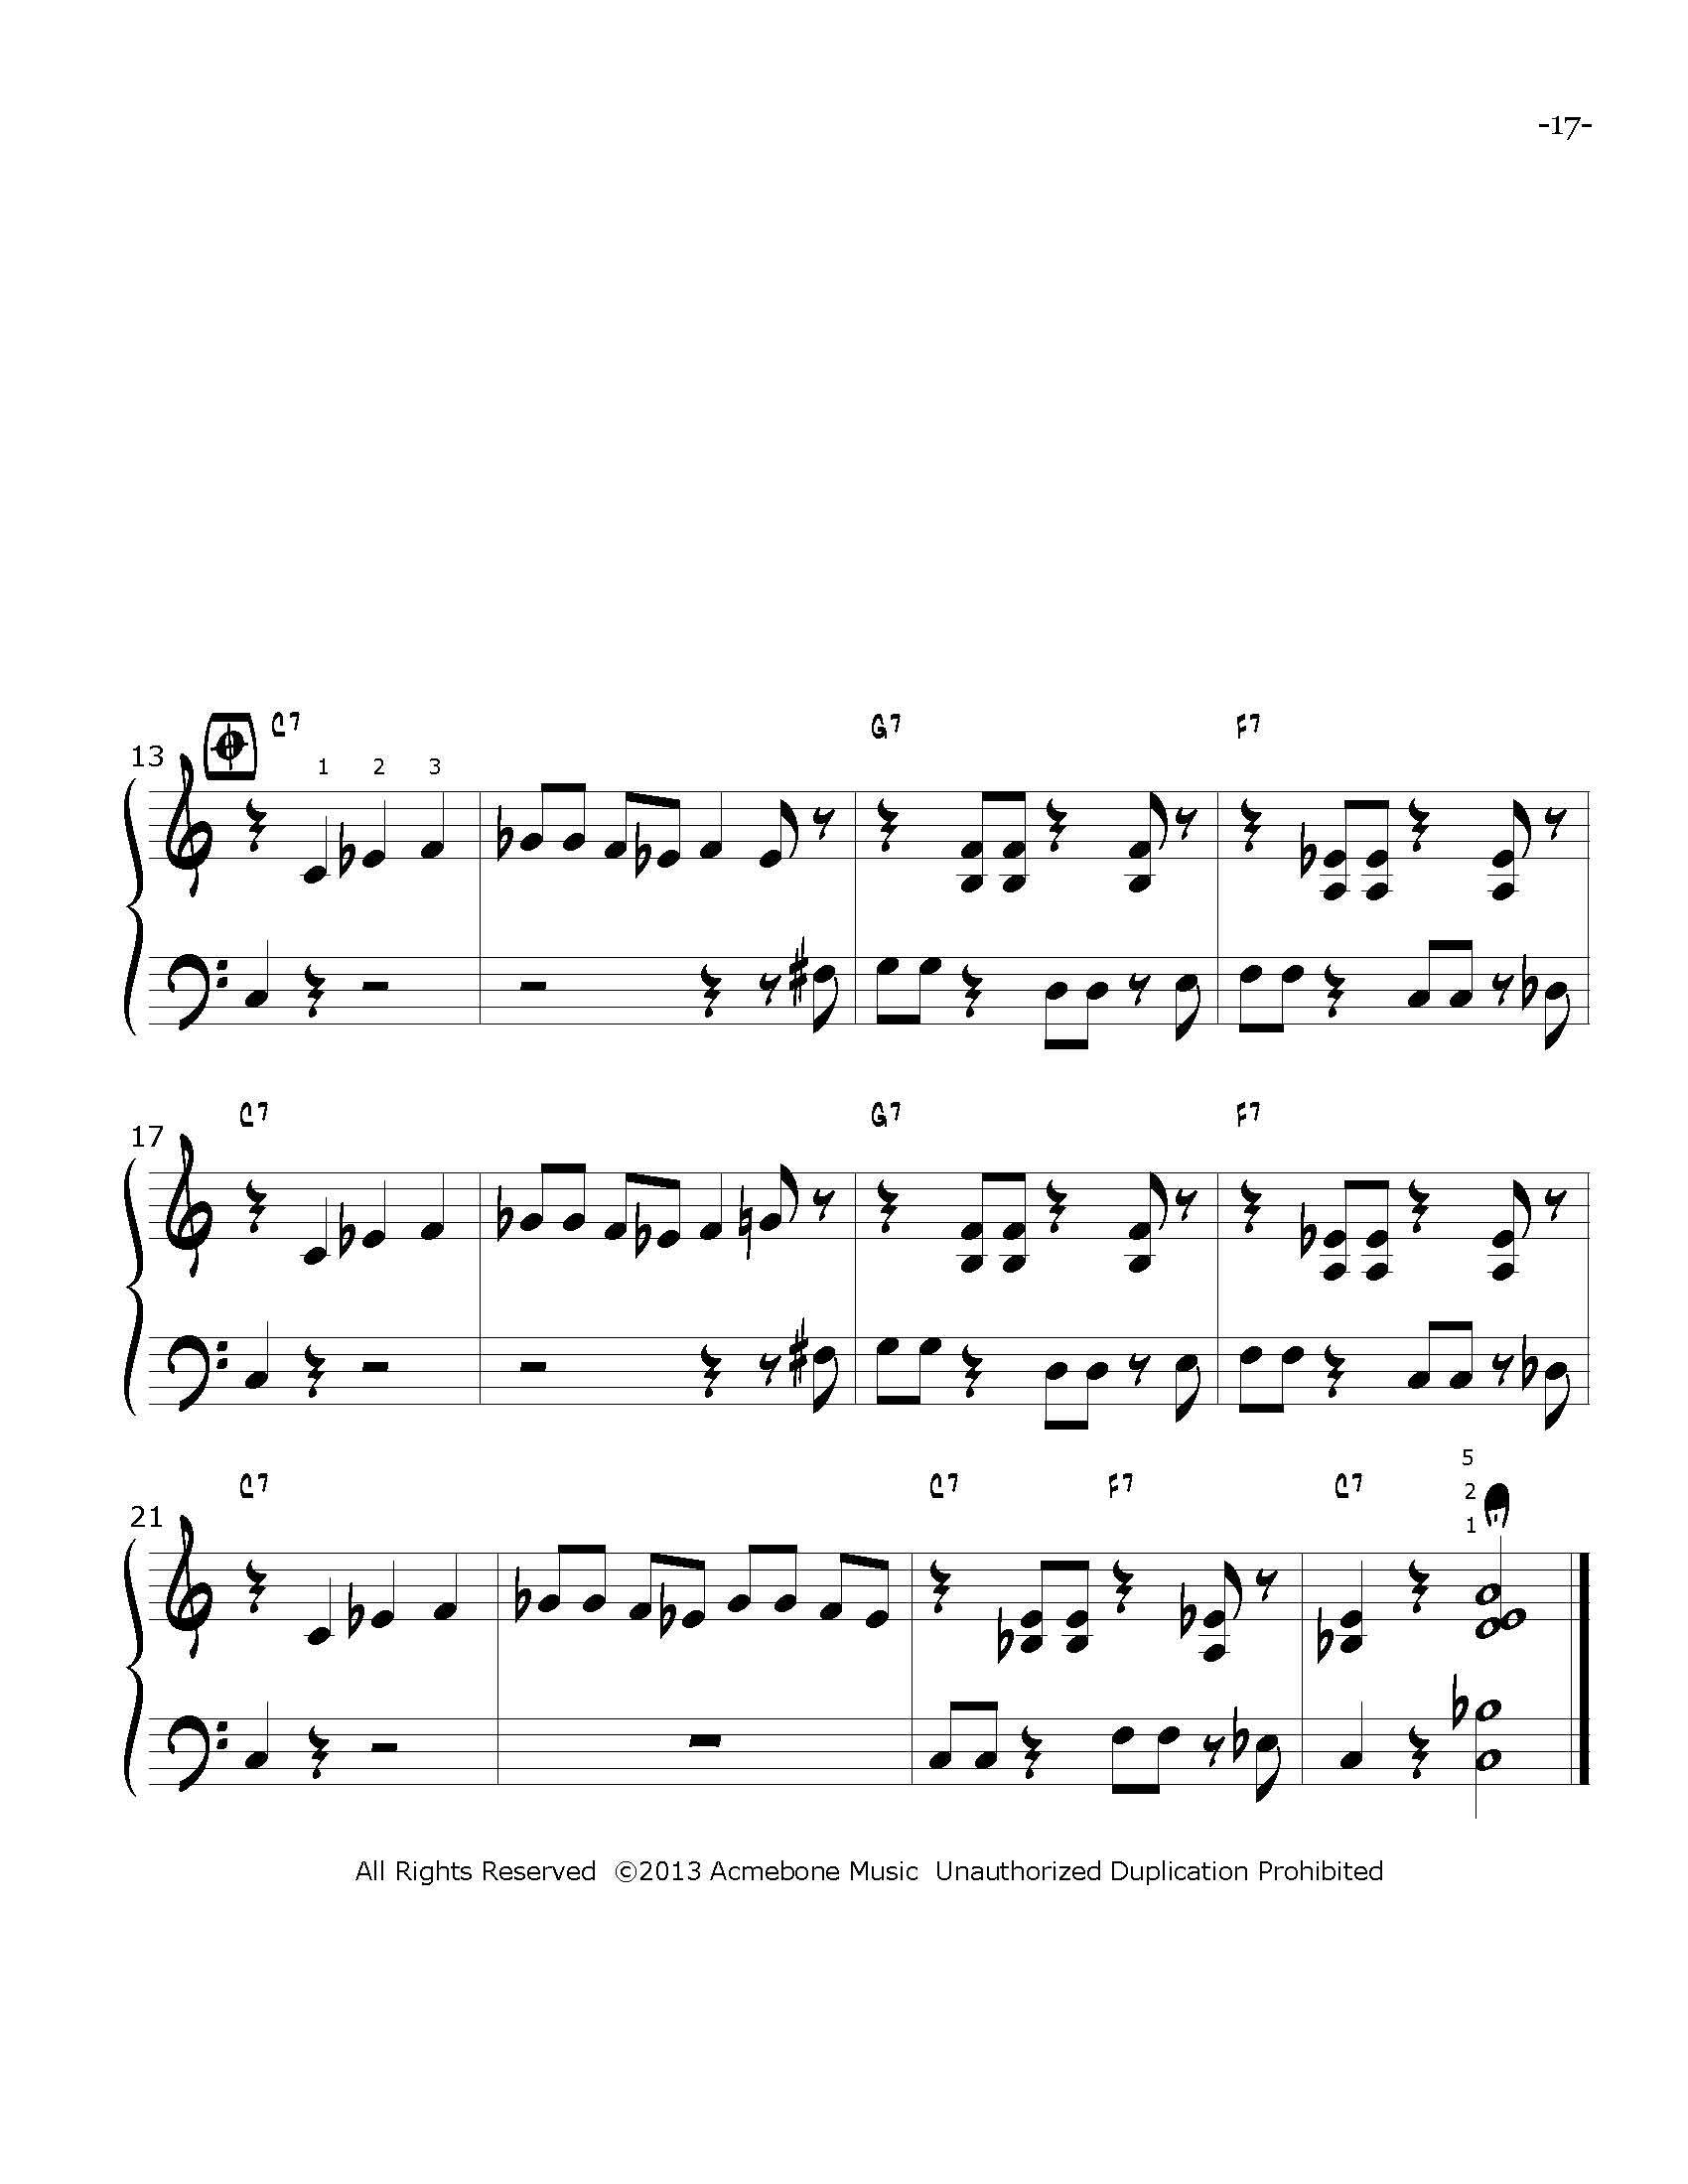 Progressive Jazz Etudes for Piano bk1 for web_Page_18.jpg